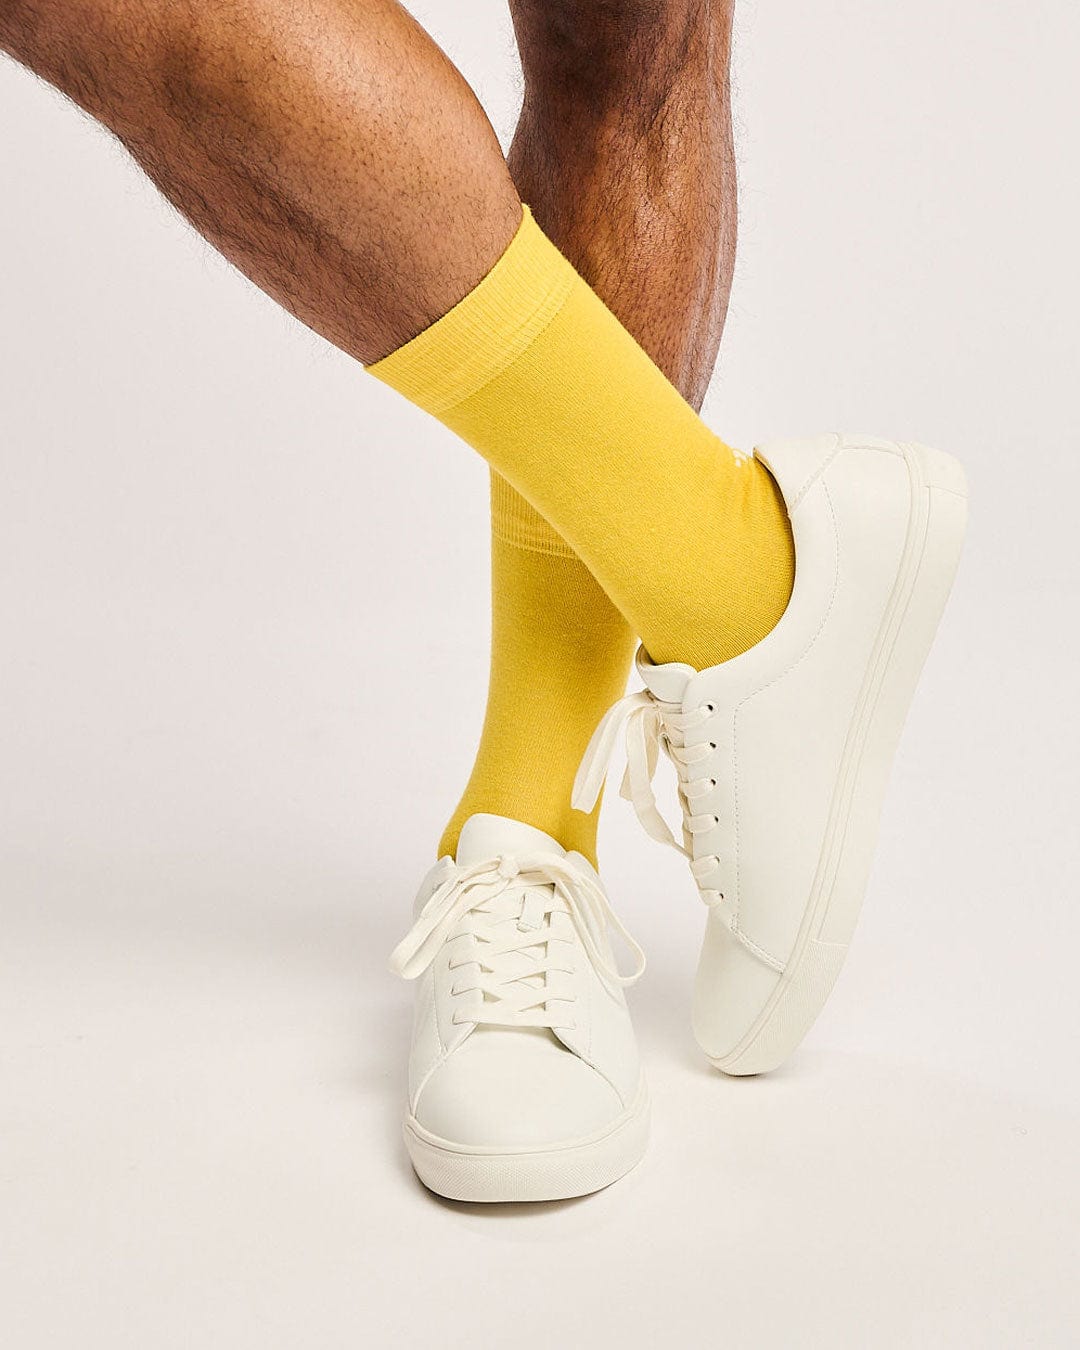 Mens yellow socks. Everyday yellow socks for men. 